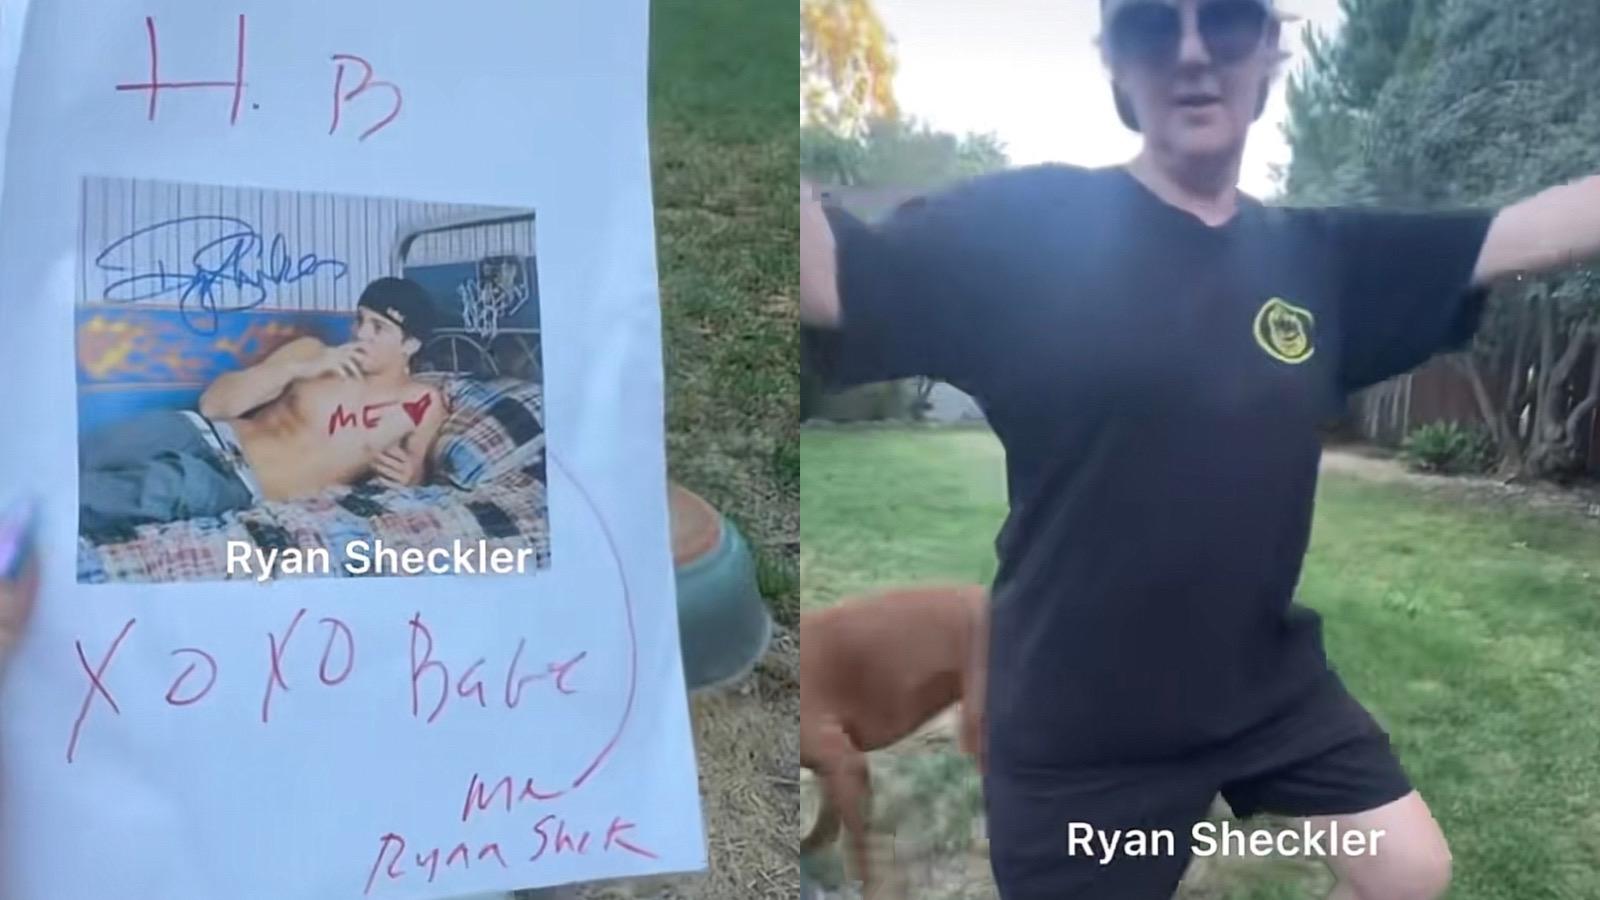 Ryan sheckler responded to tiktoker's viral costume party